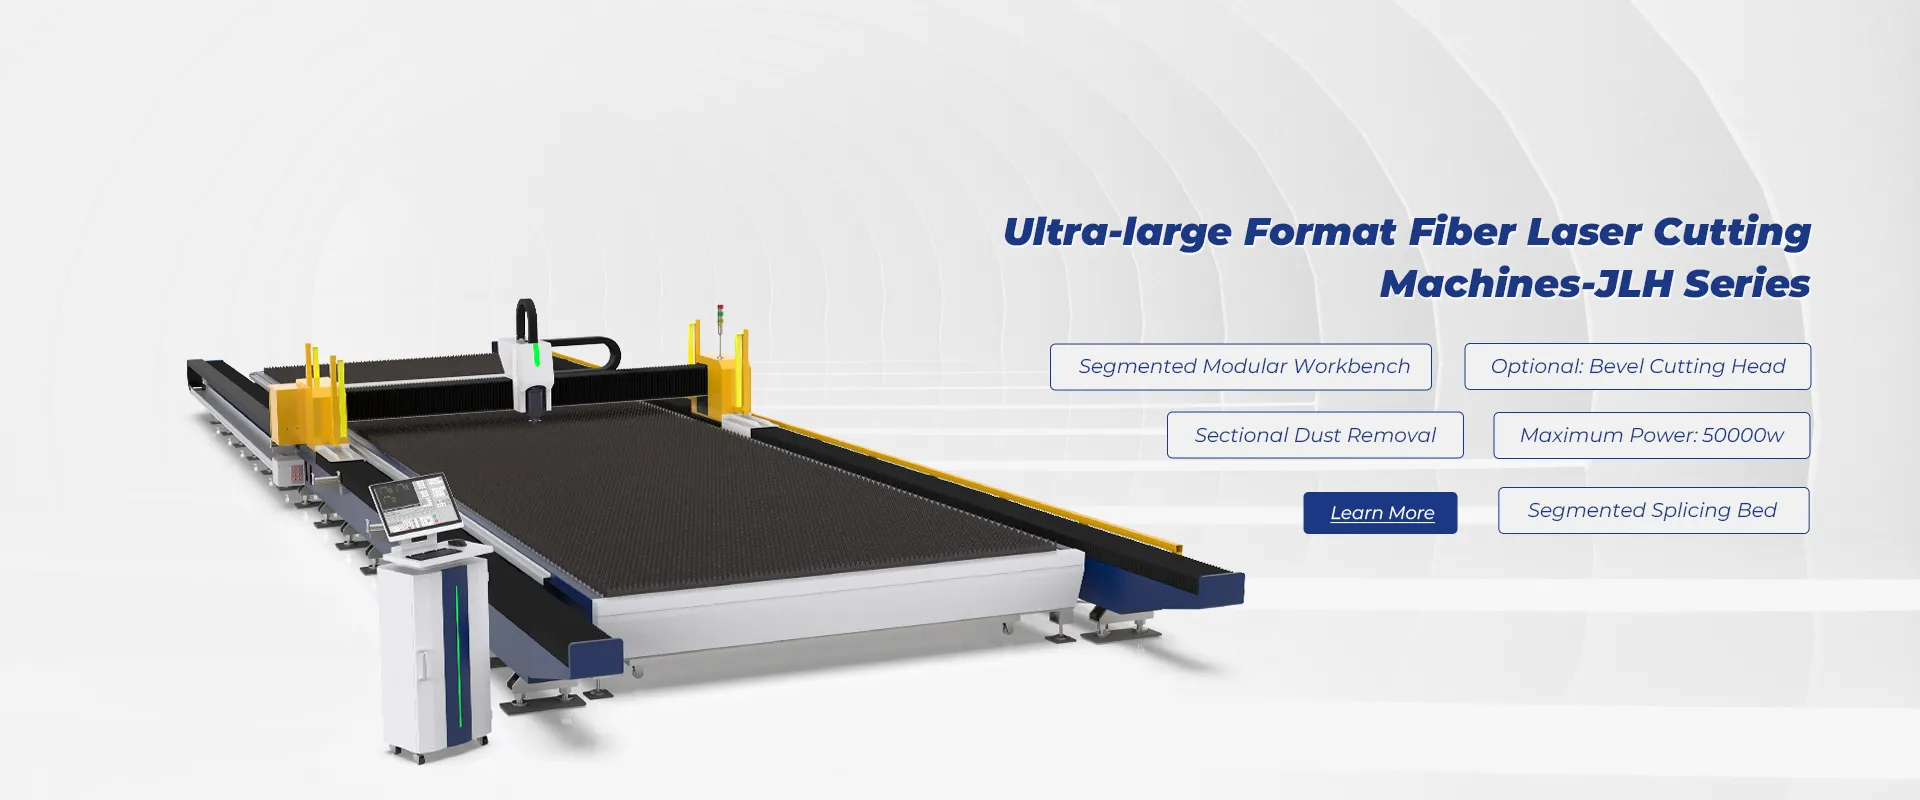 Ultra-large Format Fiber Laser Cutting Machines-JLH Series